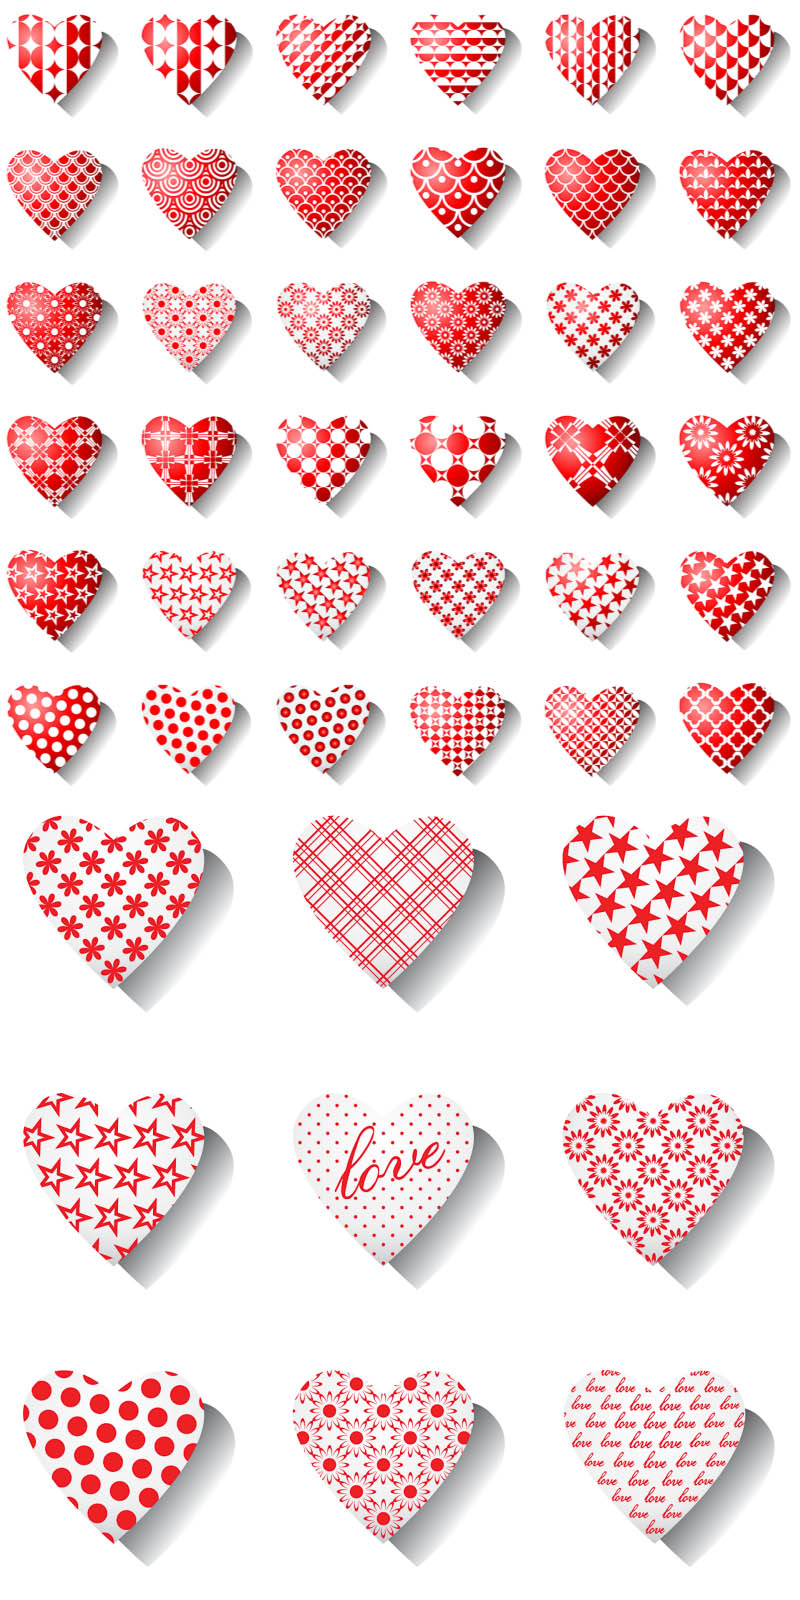 Big collection bright decorative hearts vector